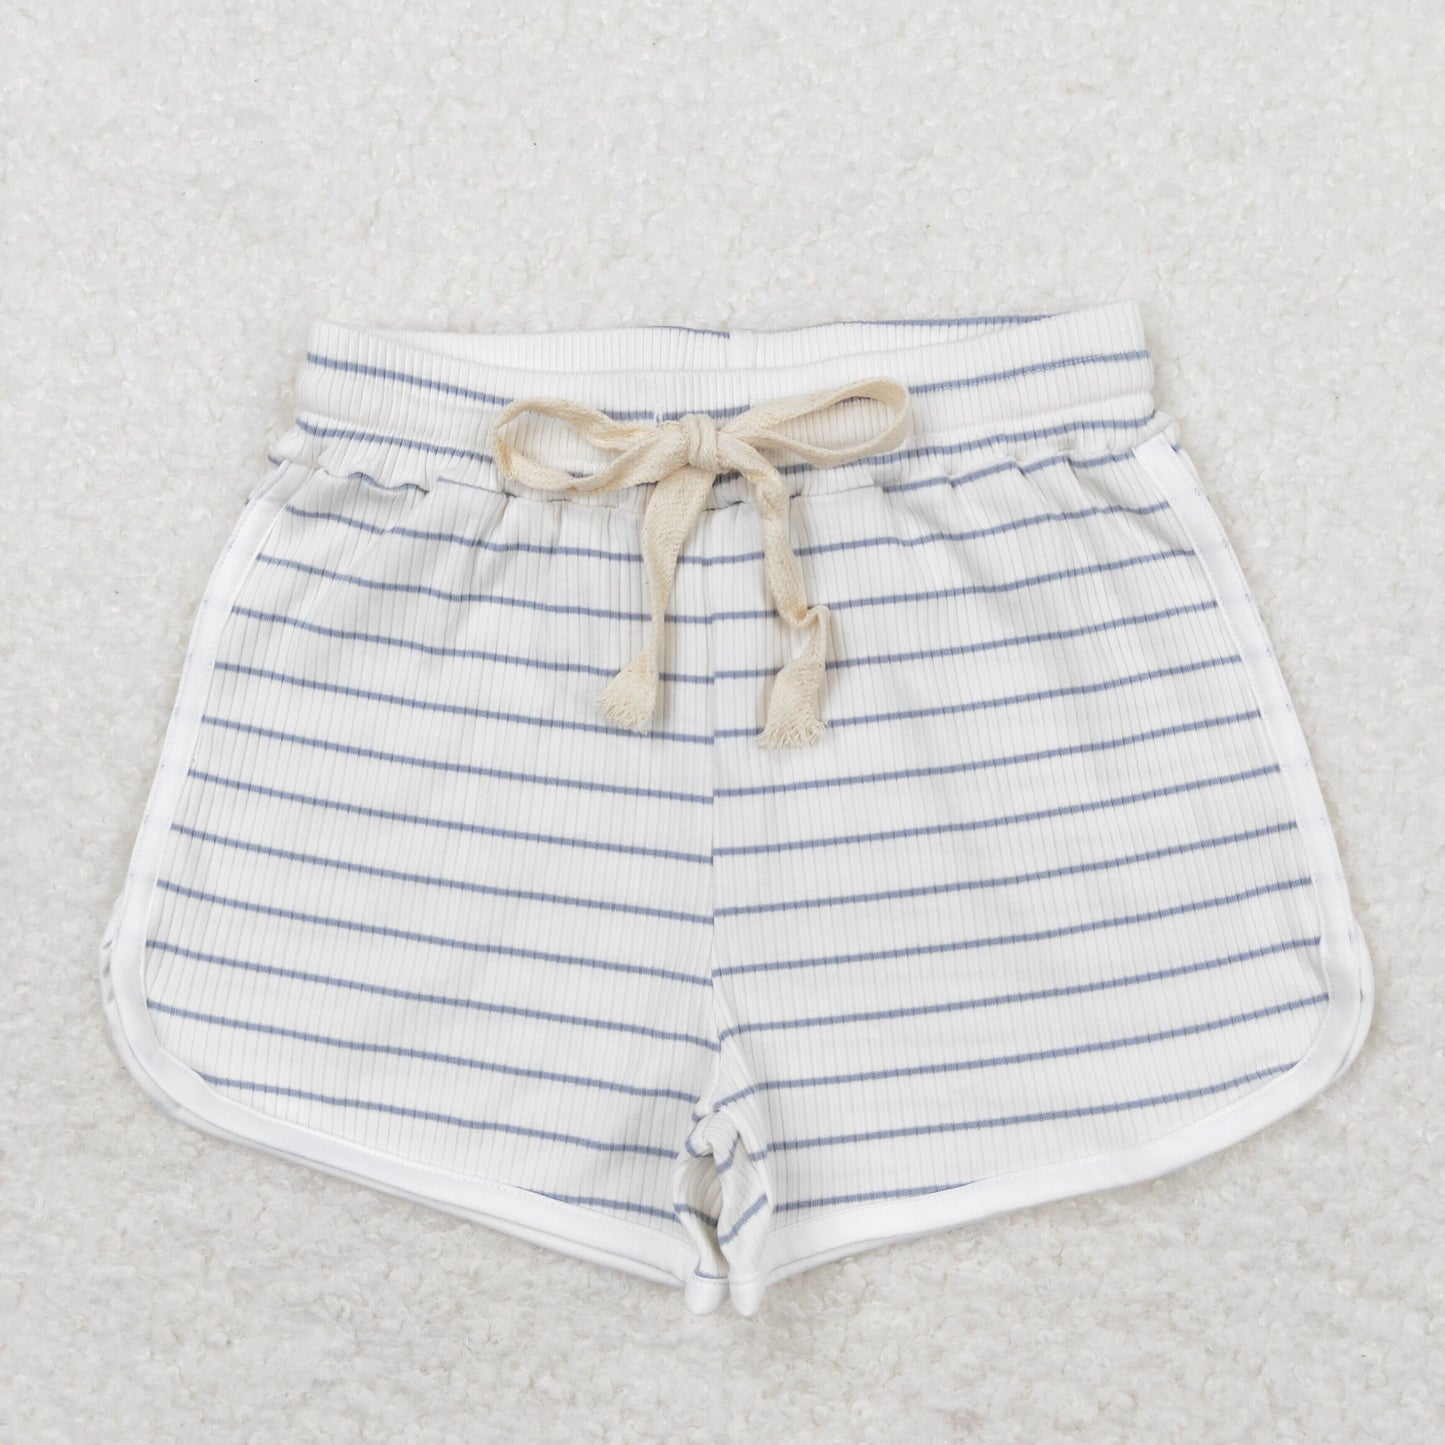 white striped girls summer shorts